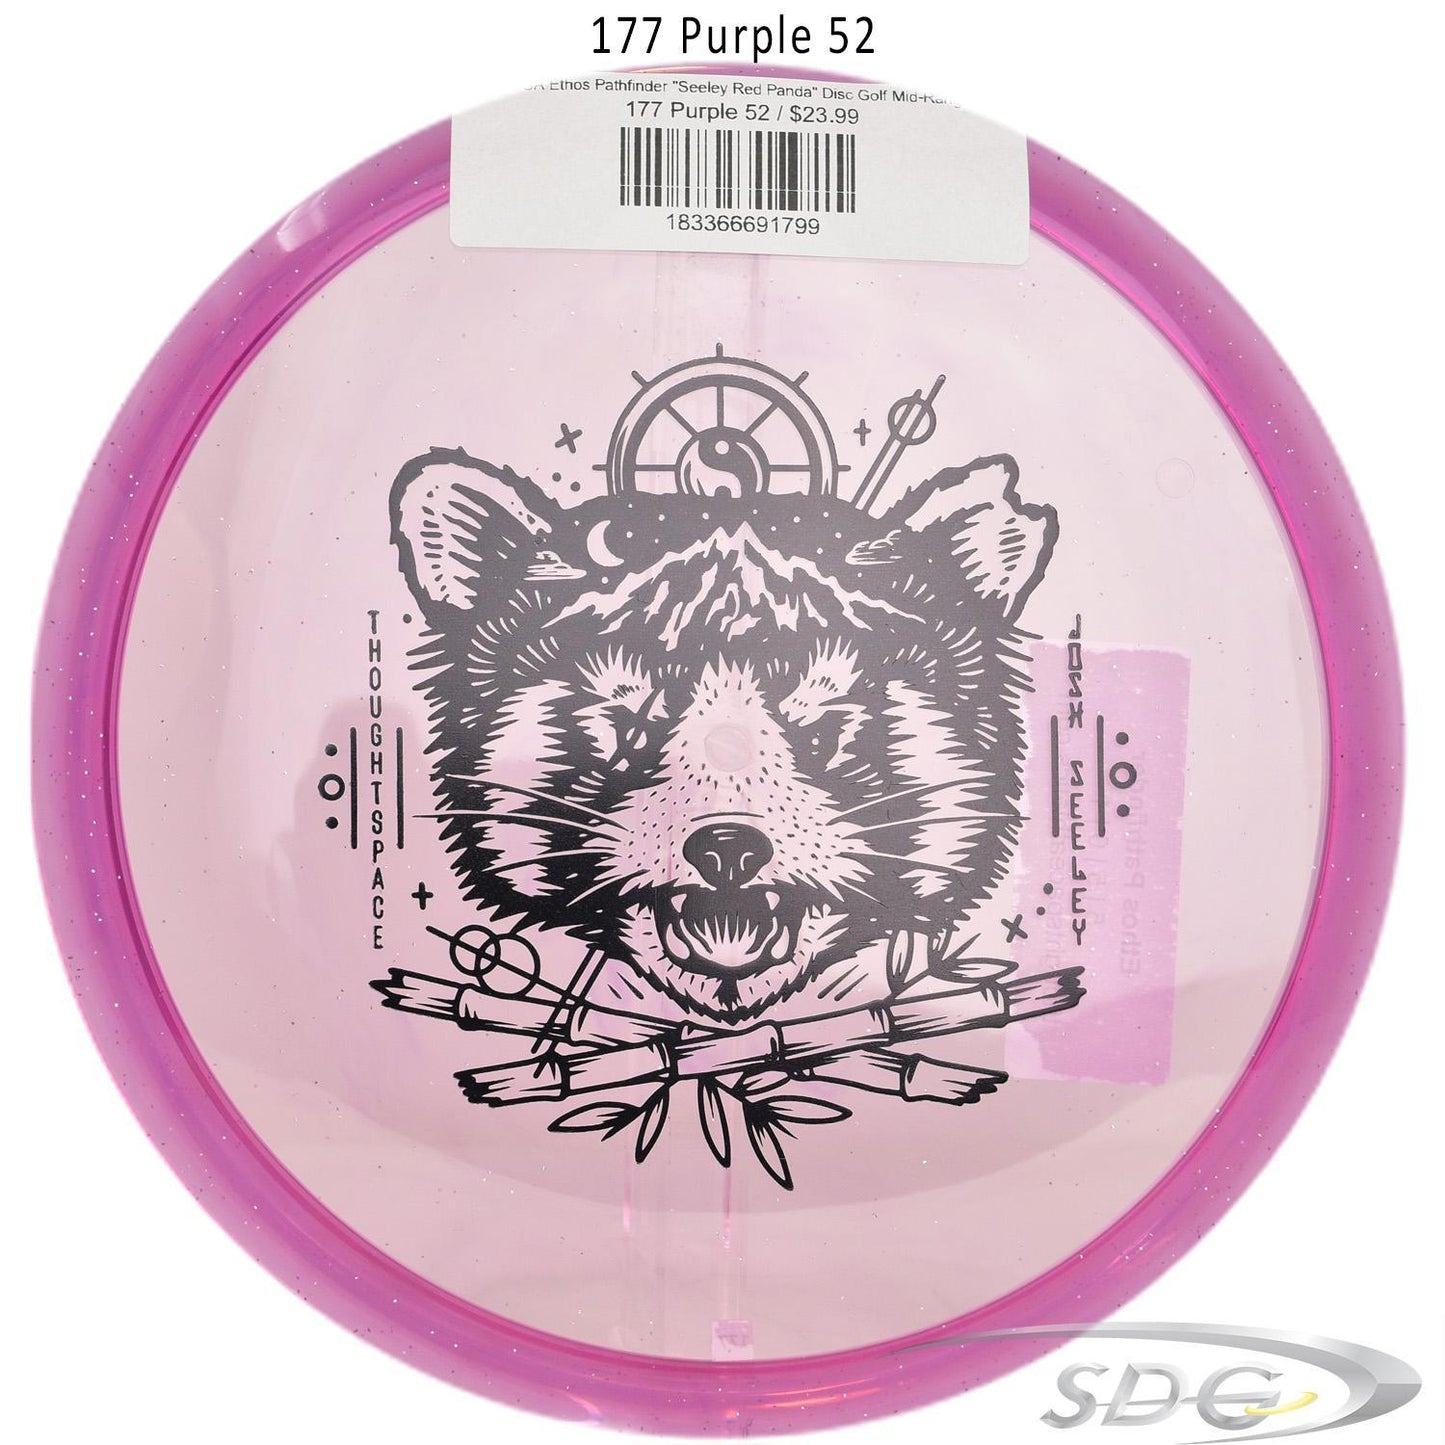 tsa-ethos-pathfinder-seeley-red-panda-disc-golf-mid-range 177 Purple 52 